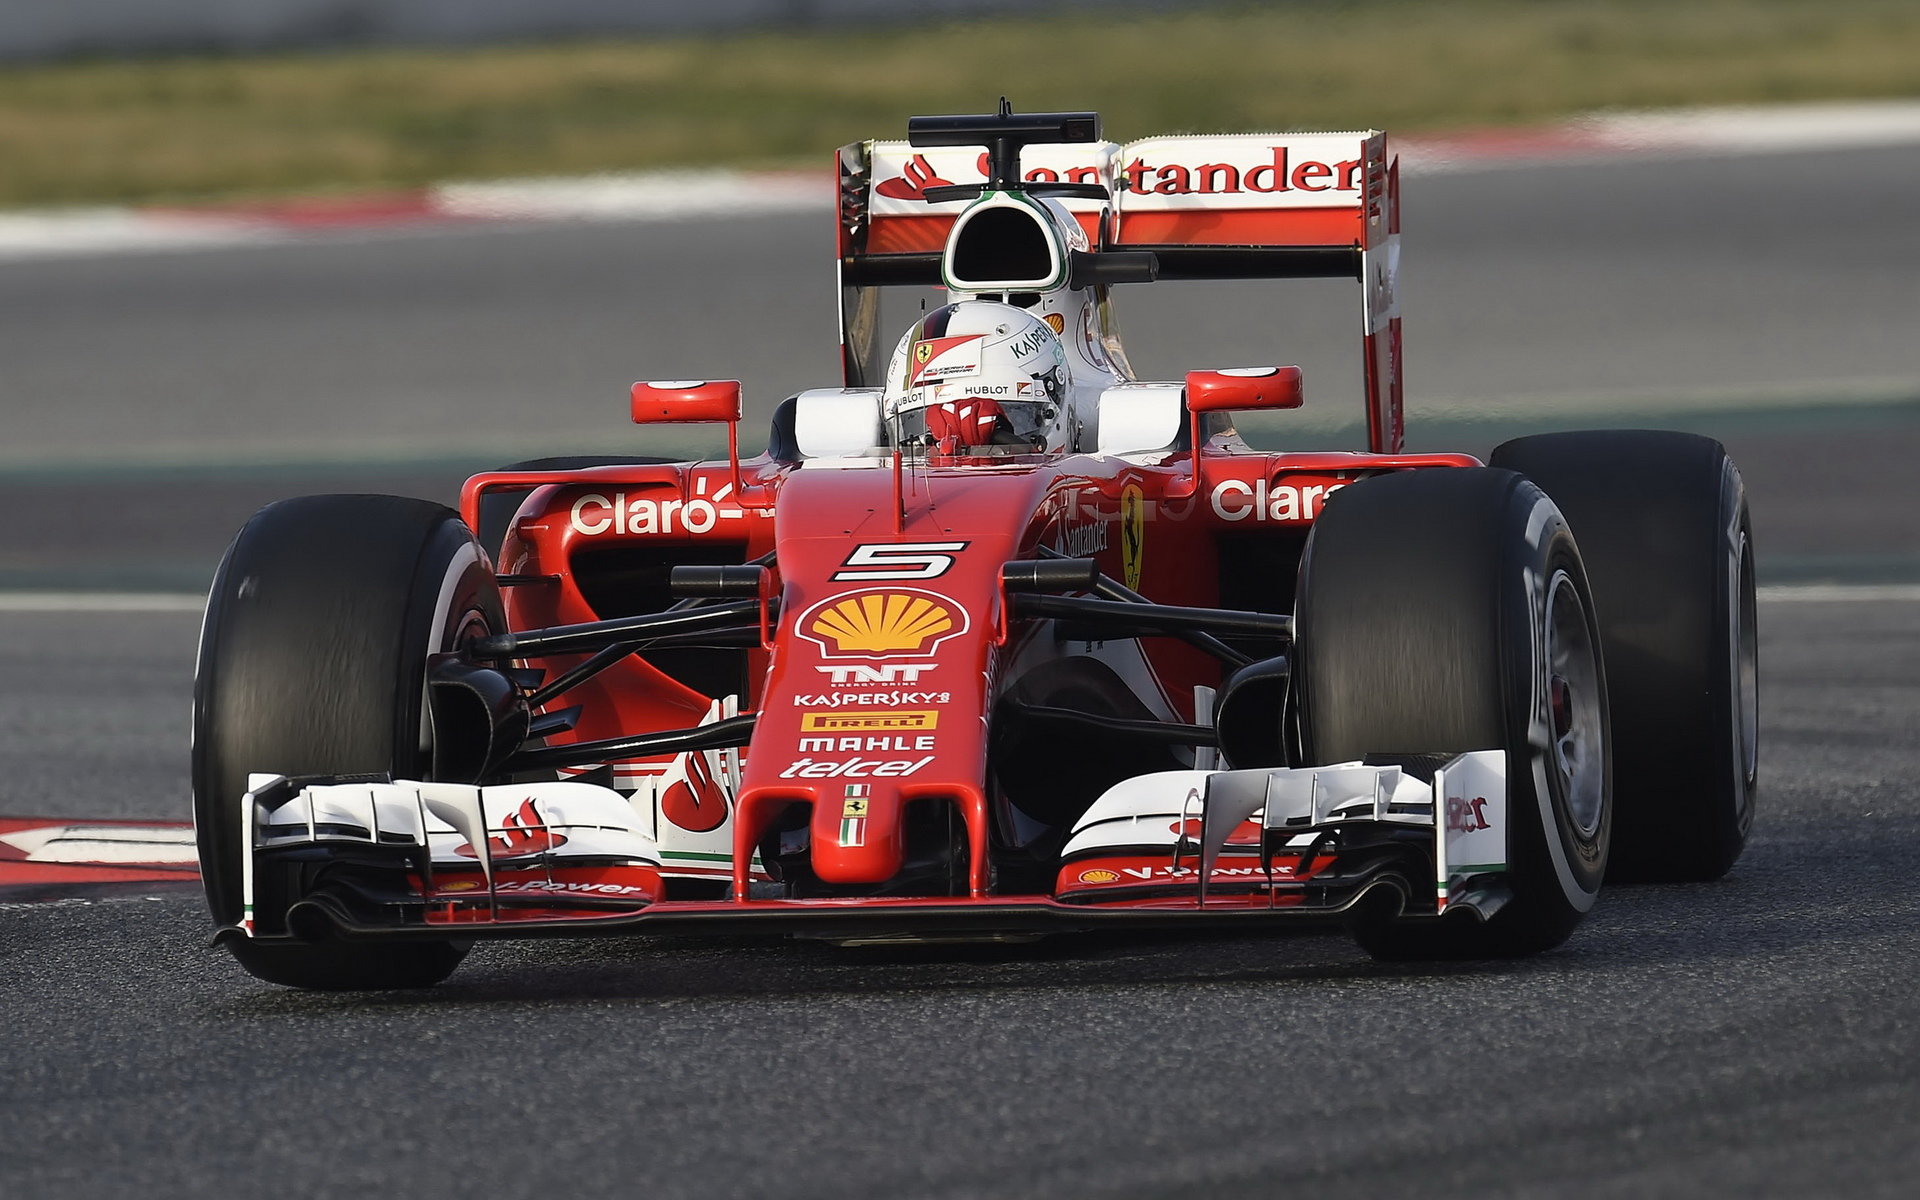 Kimi dnes u Ferrari střídá Sebastiana, na dráze se dnes rudý vůz ale ještě neukázal